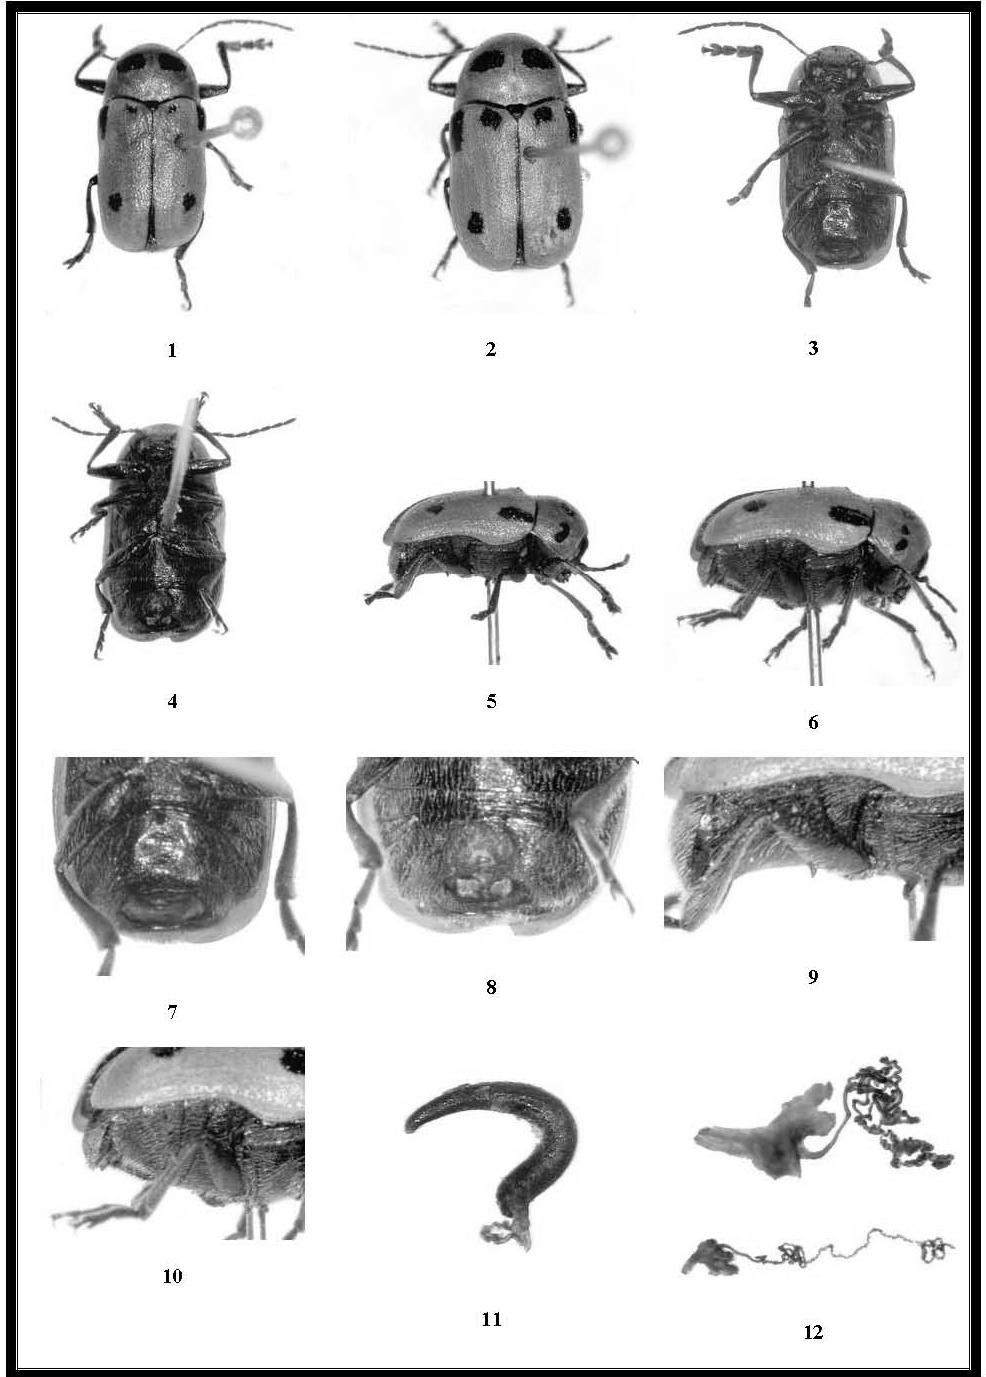 Mun. Ent. Zool. Vol. 2, No. 2, June 2007 497 Plate I: Figures 1. Dorsal view of male, 2. Dorsal view of female, 3. Ventral view of male, 4. Ventral view of female, 5. Lateral view of male, 6.